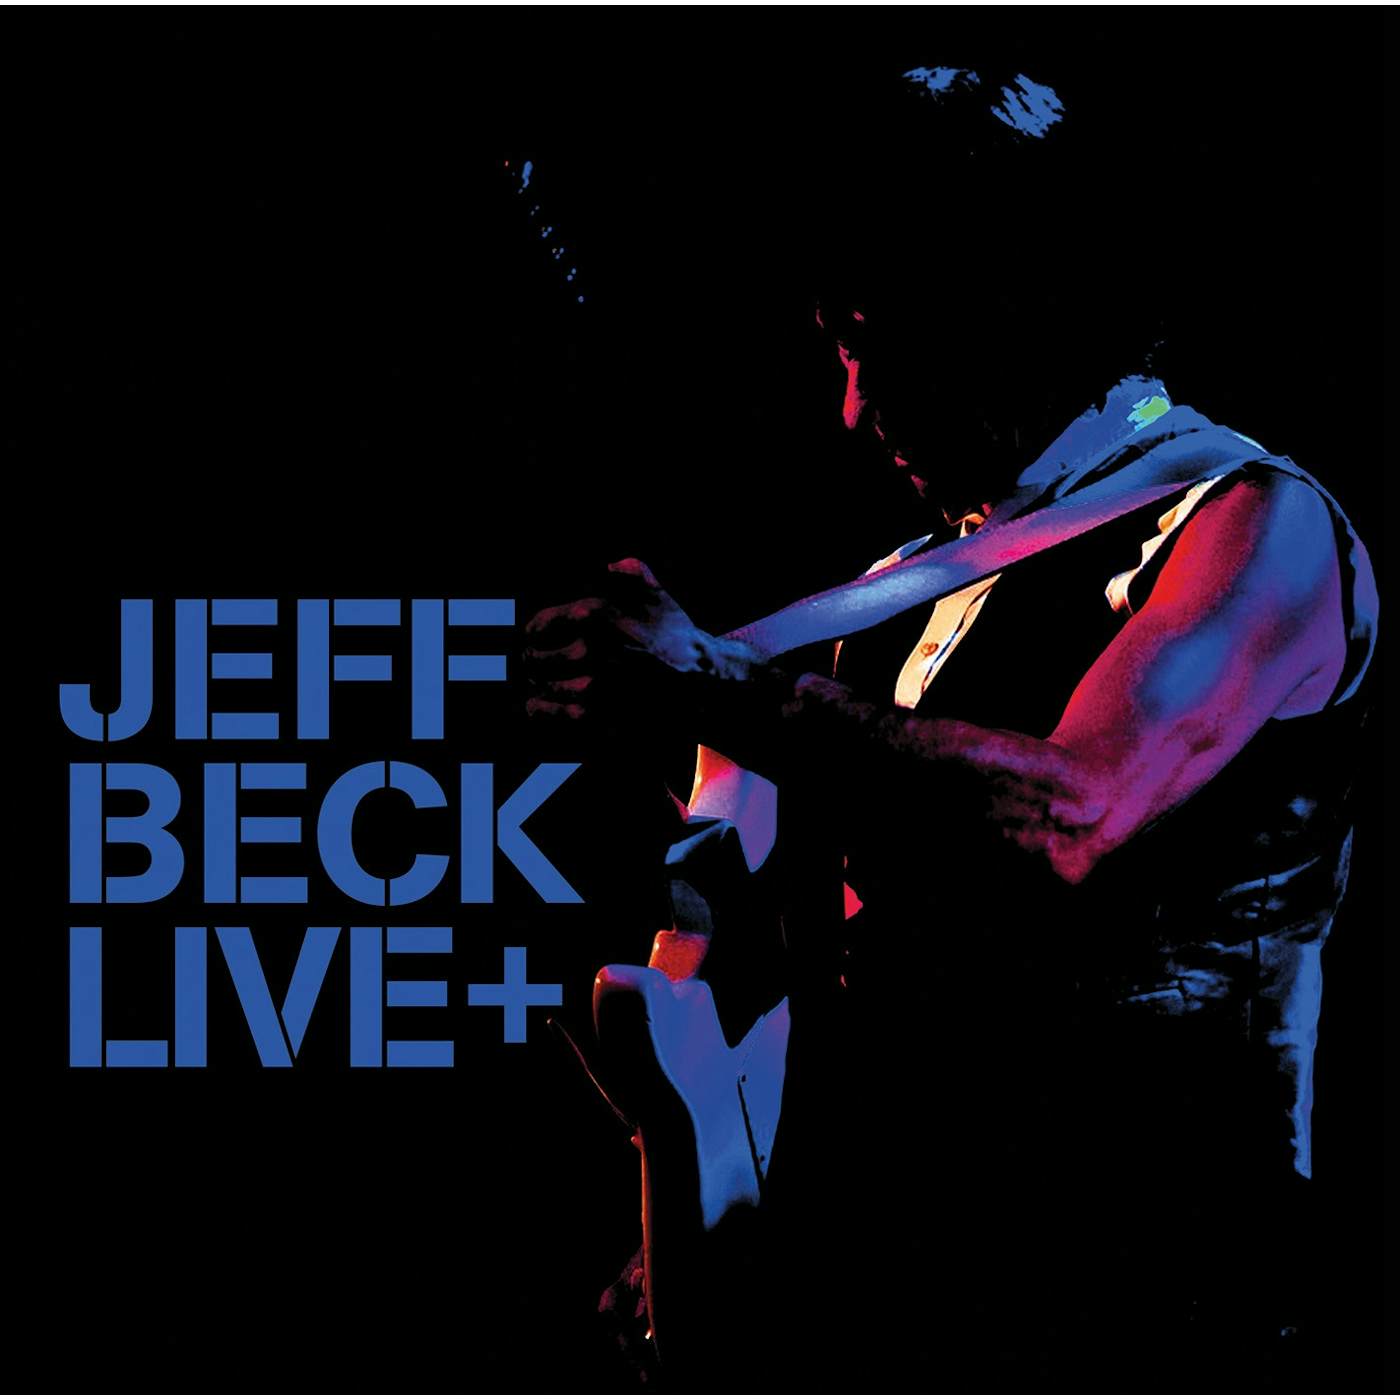 Jeff Beck Live + Vinyl Record